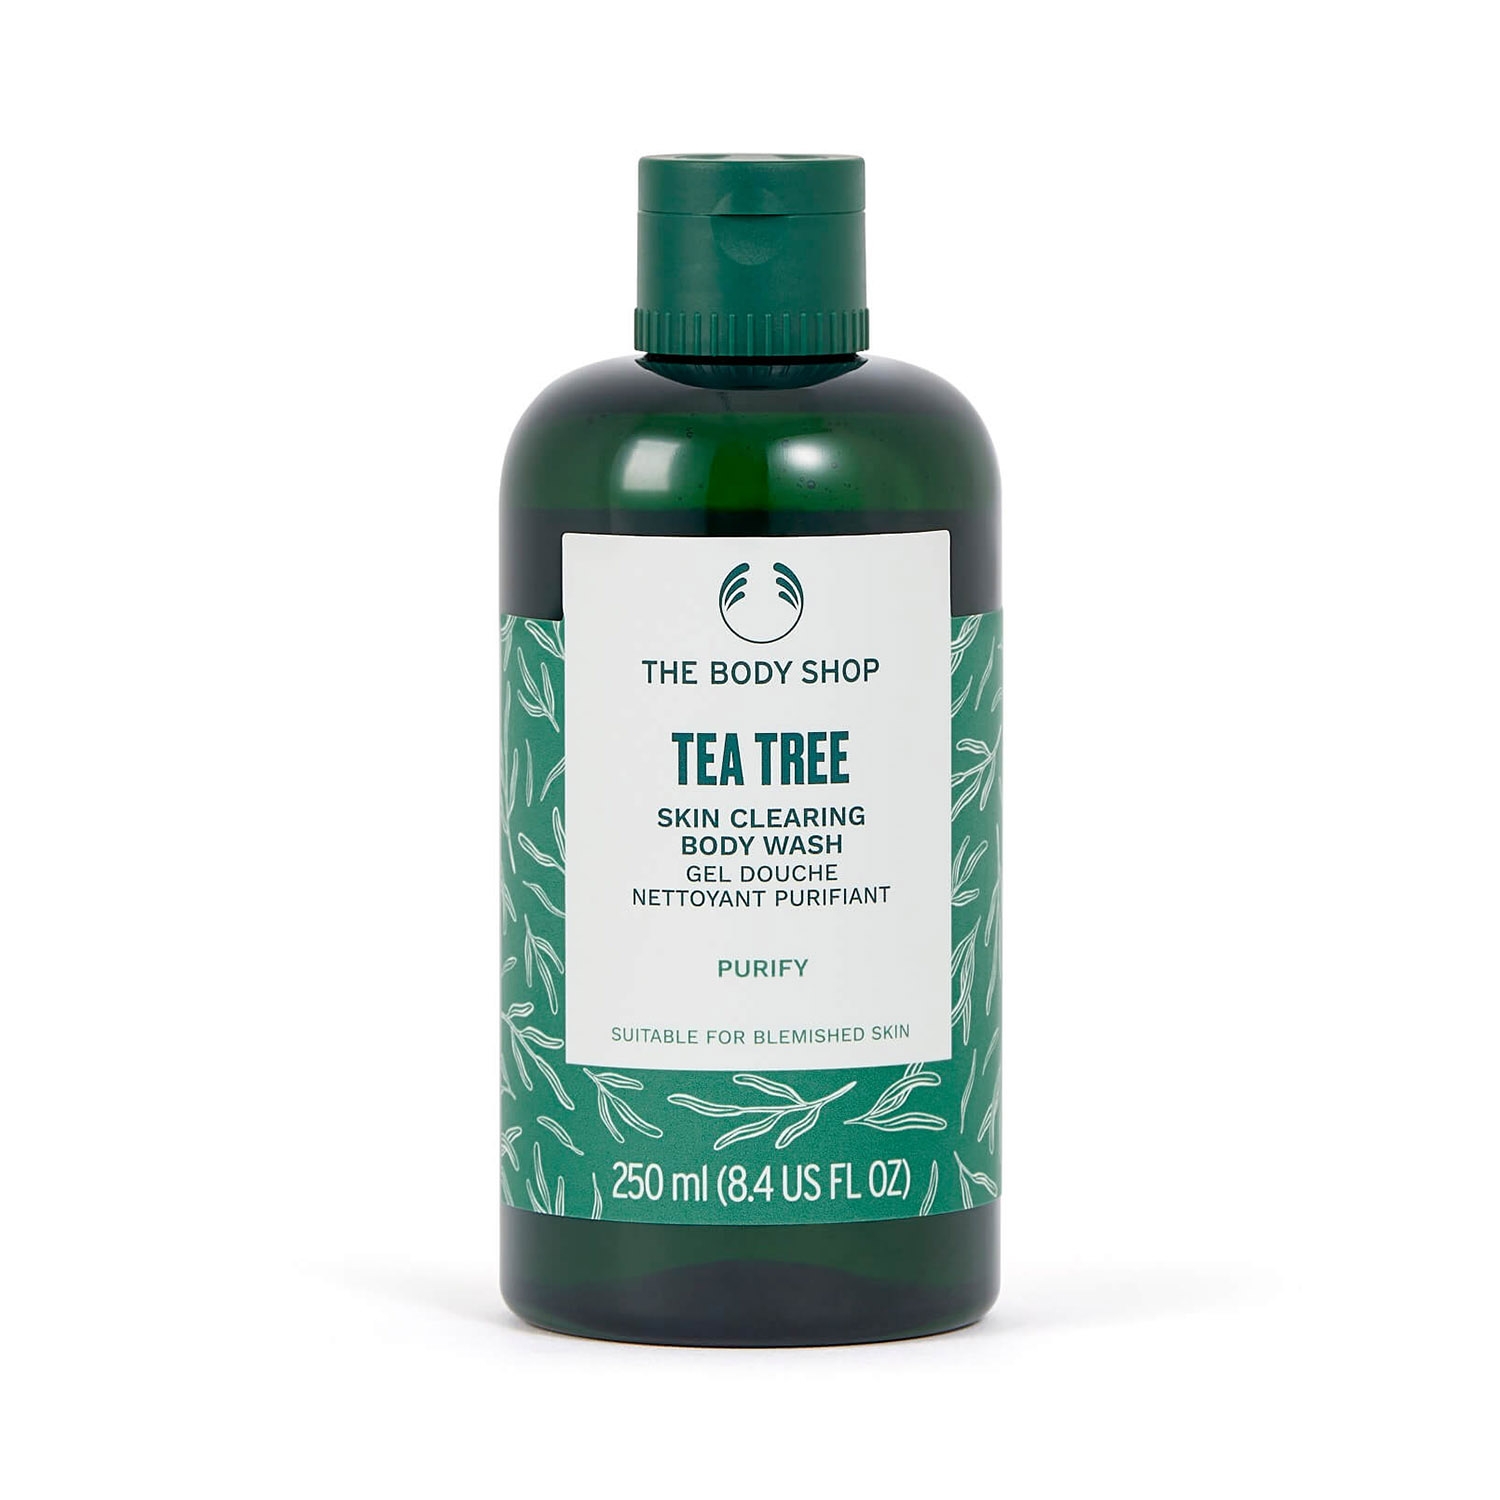 The Body Shop | The Body Shop Tea Tree Skin Clearing Body Wash (250ml)